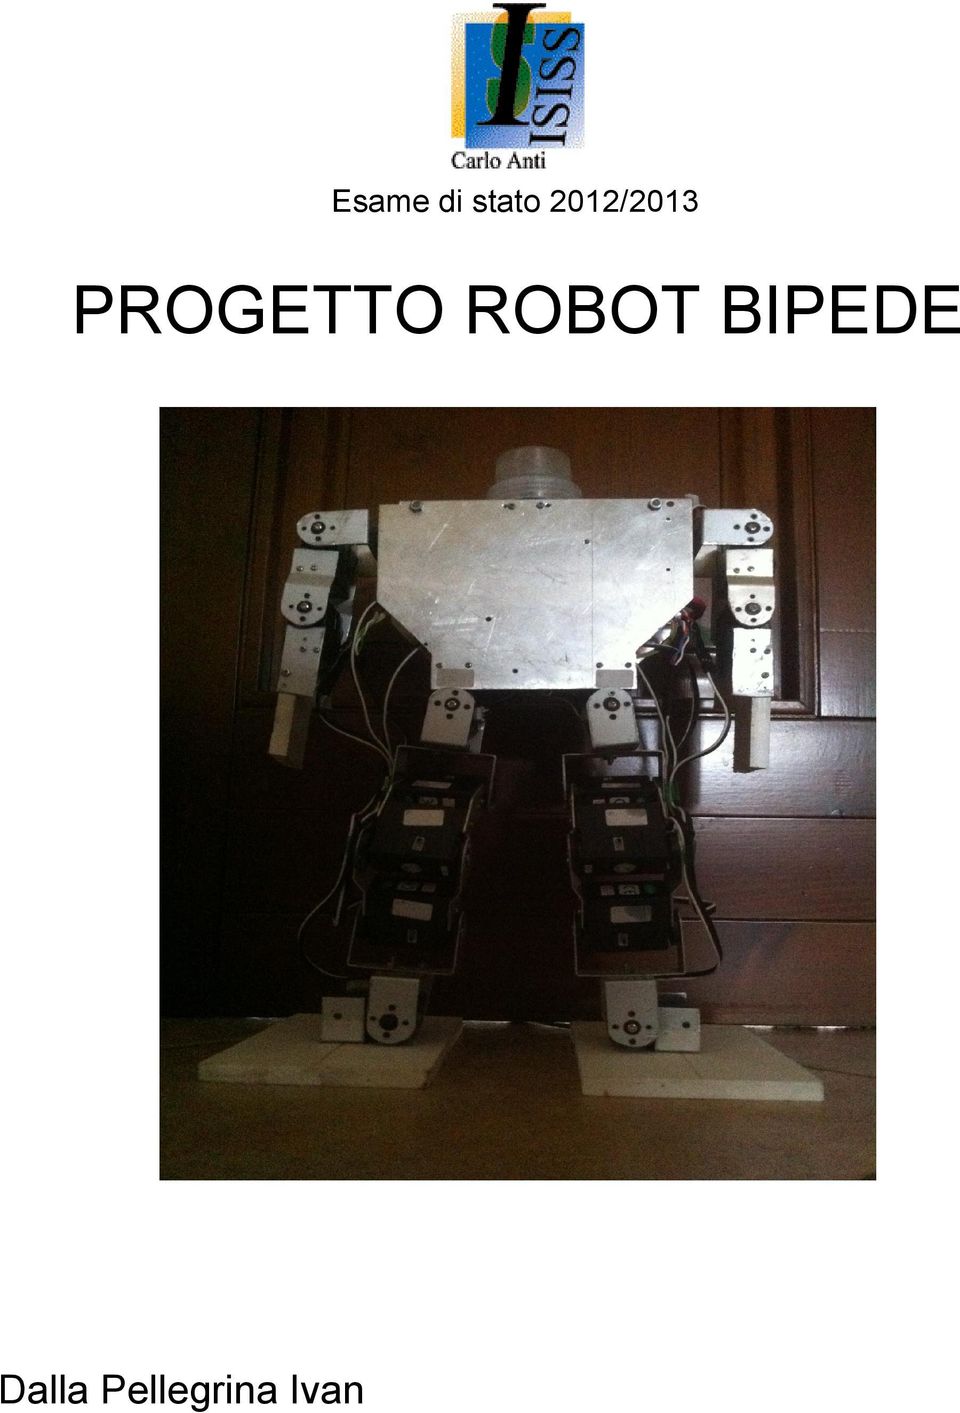 PROGETTO ROBOT